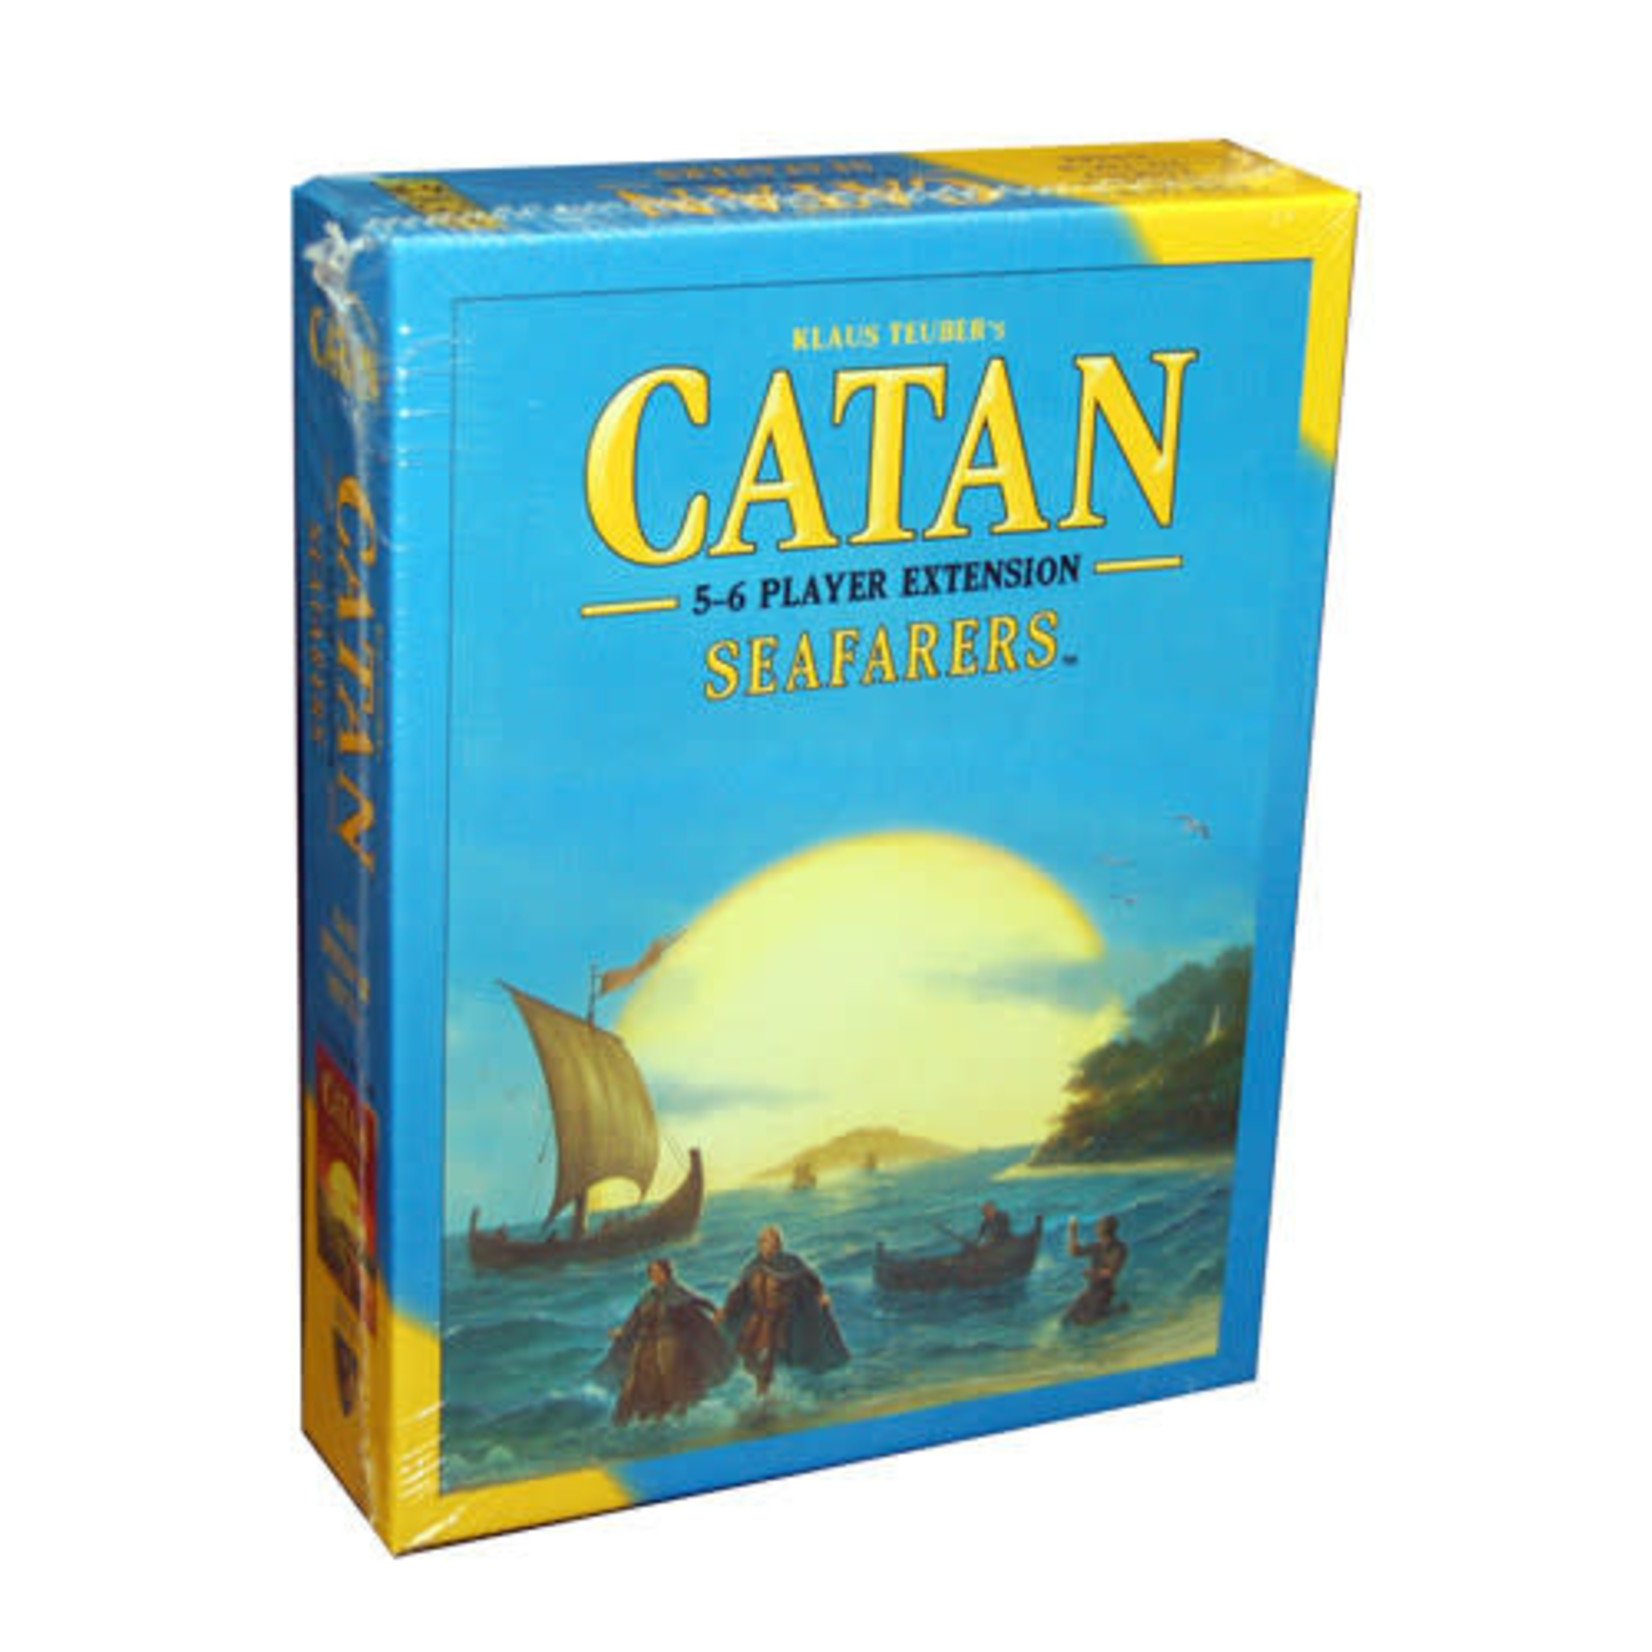 Catan Seafarers 5-6 Player Extension Board Game